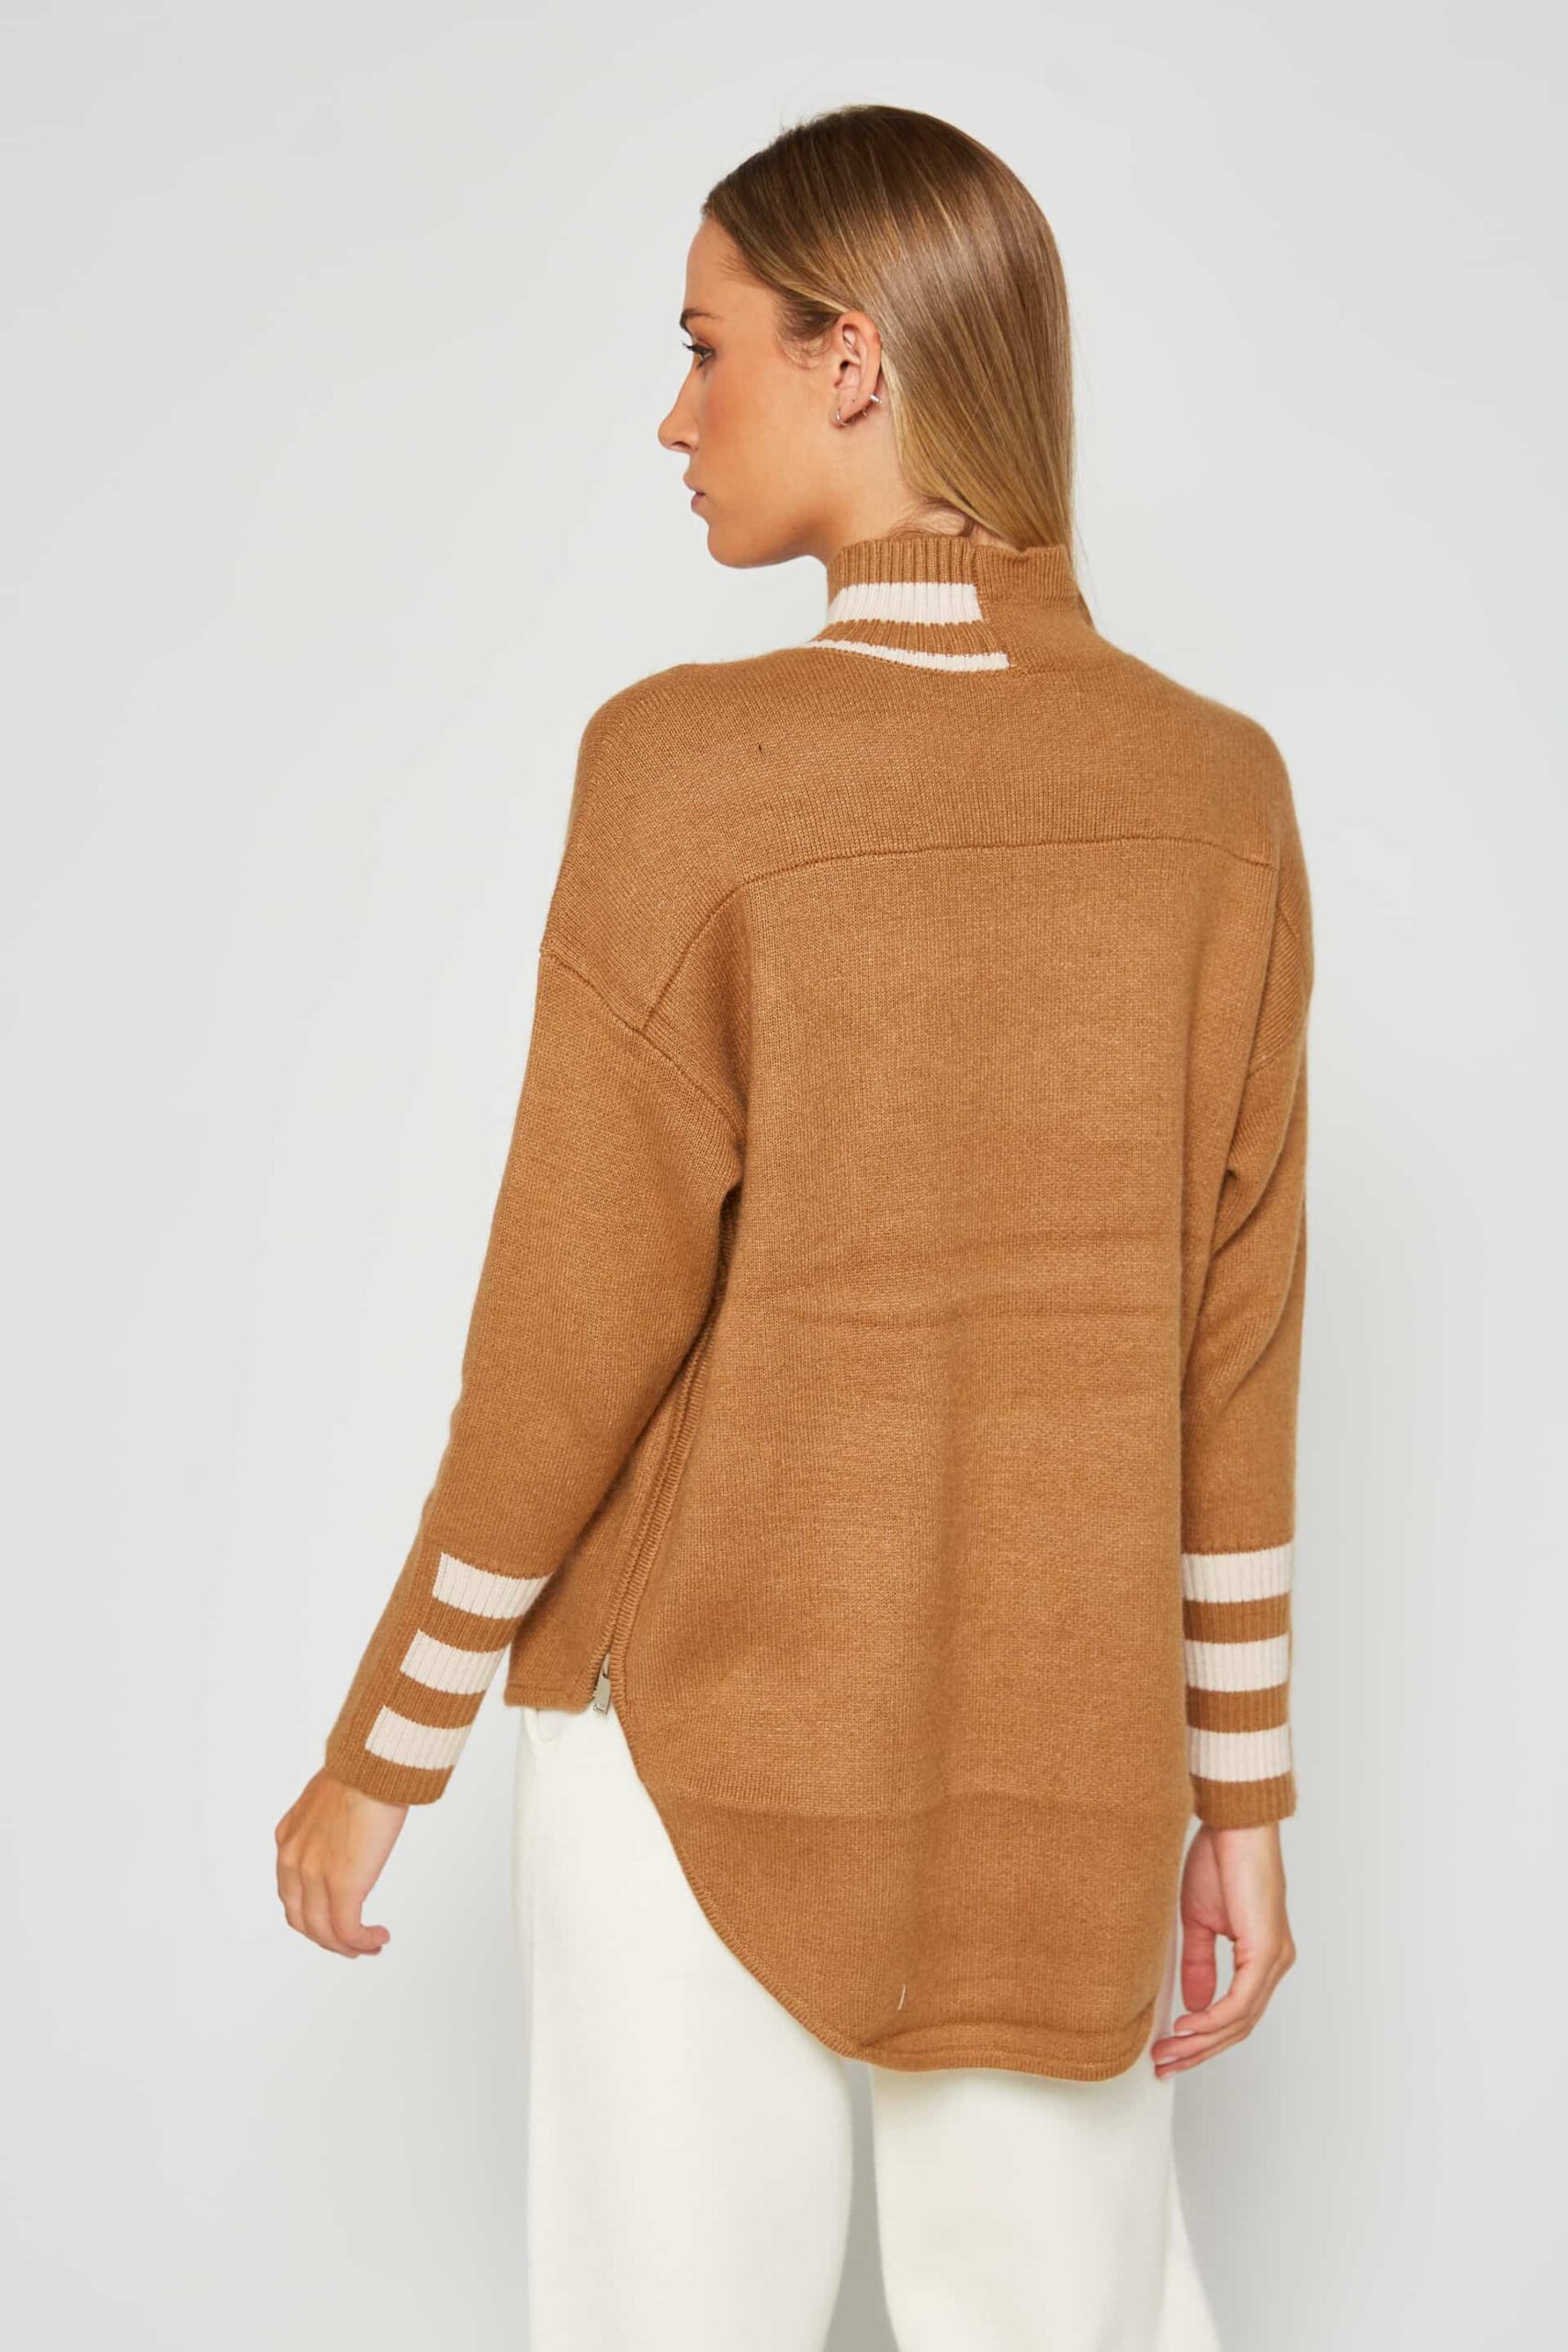 Sweater with stripe interior